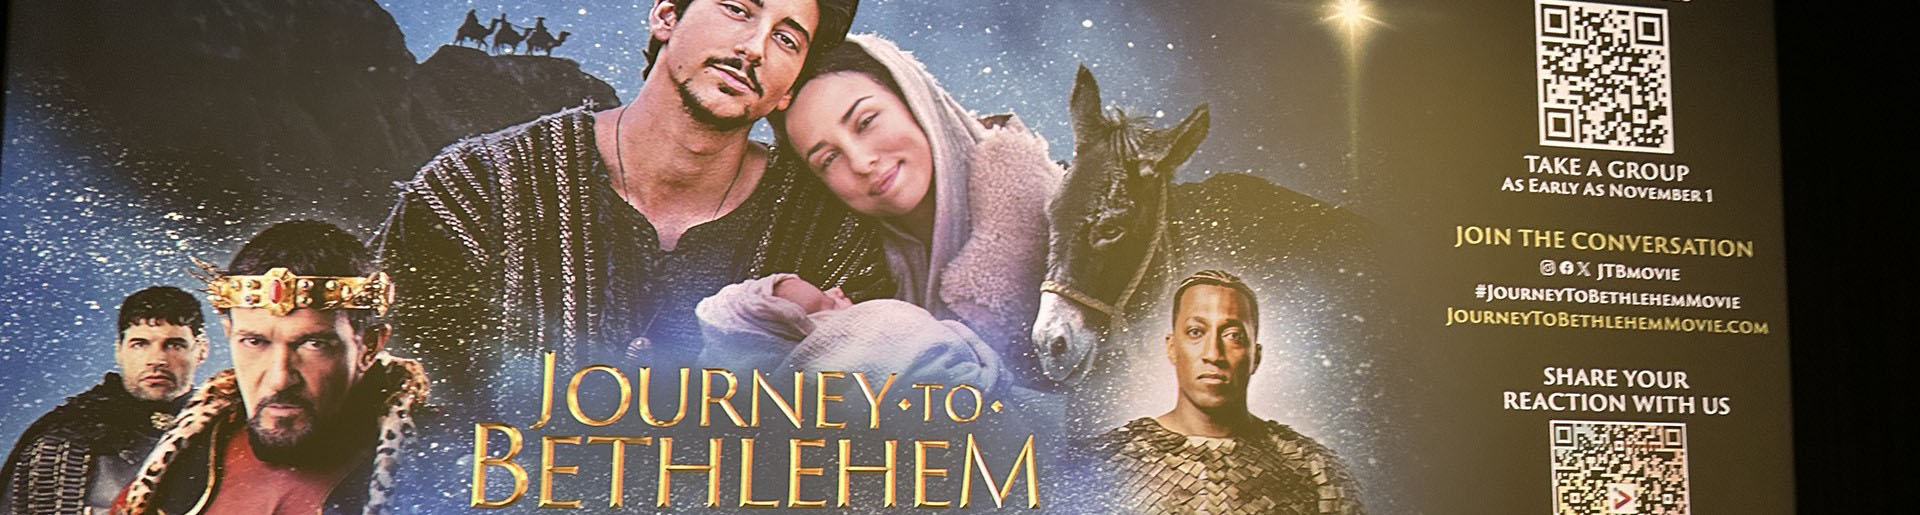 Journey to Bethlehem.